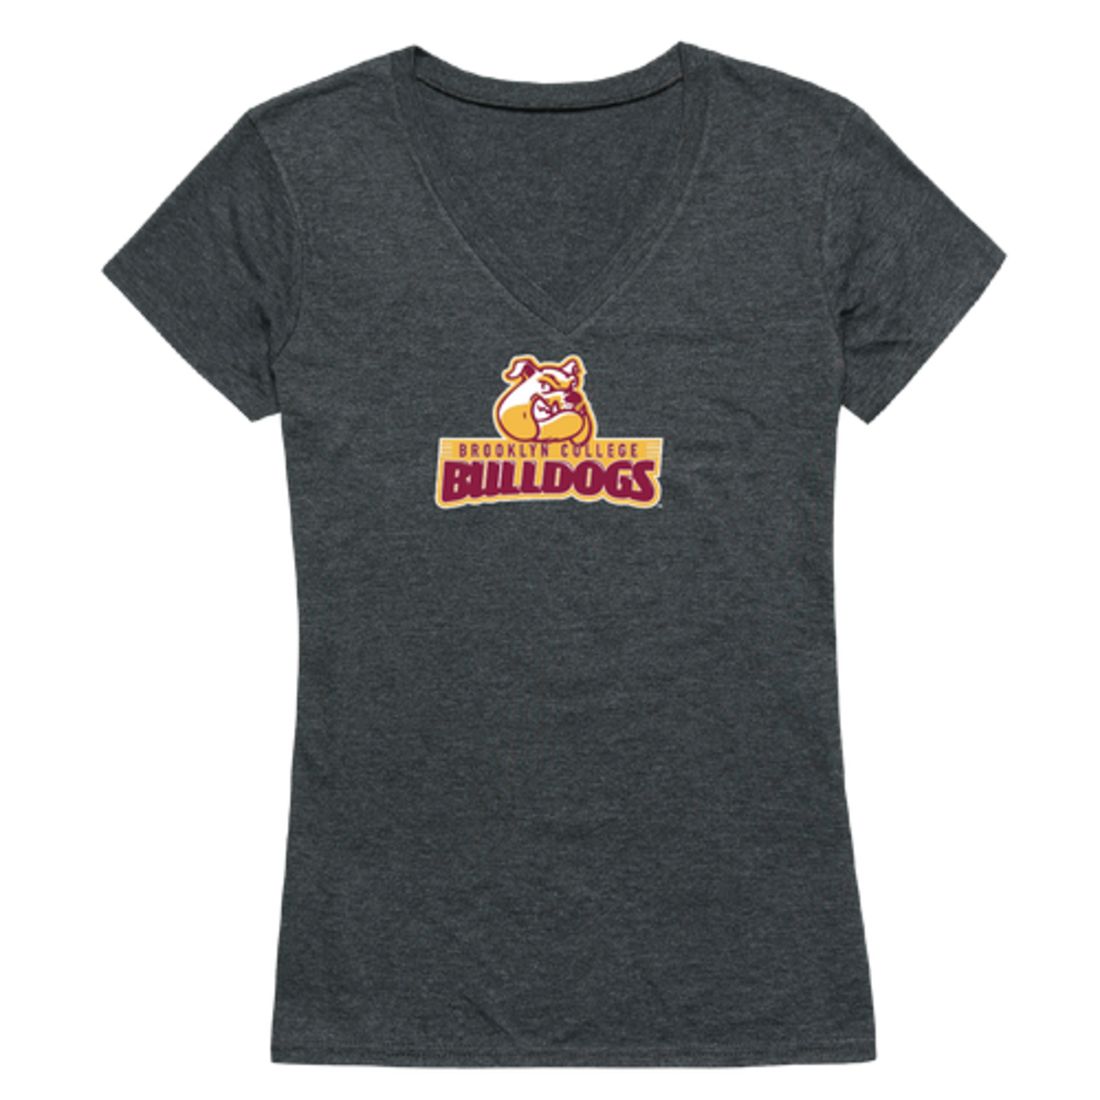 Brooklyn College Bulldogs Womens Cinder T-Shirt Tee